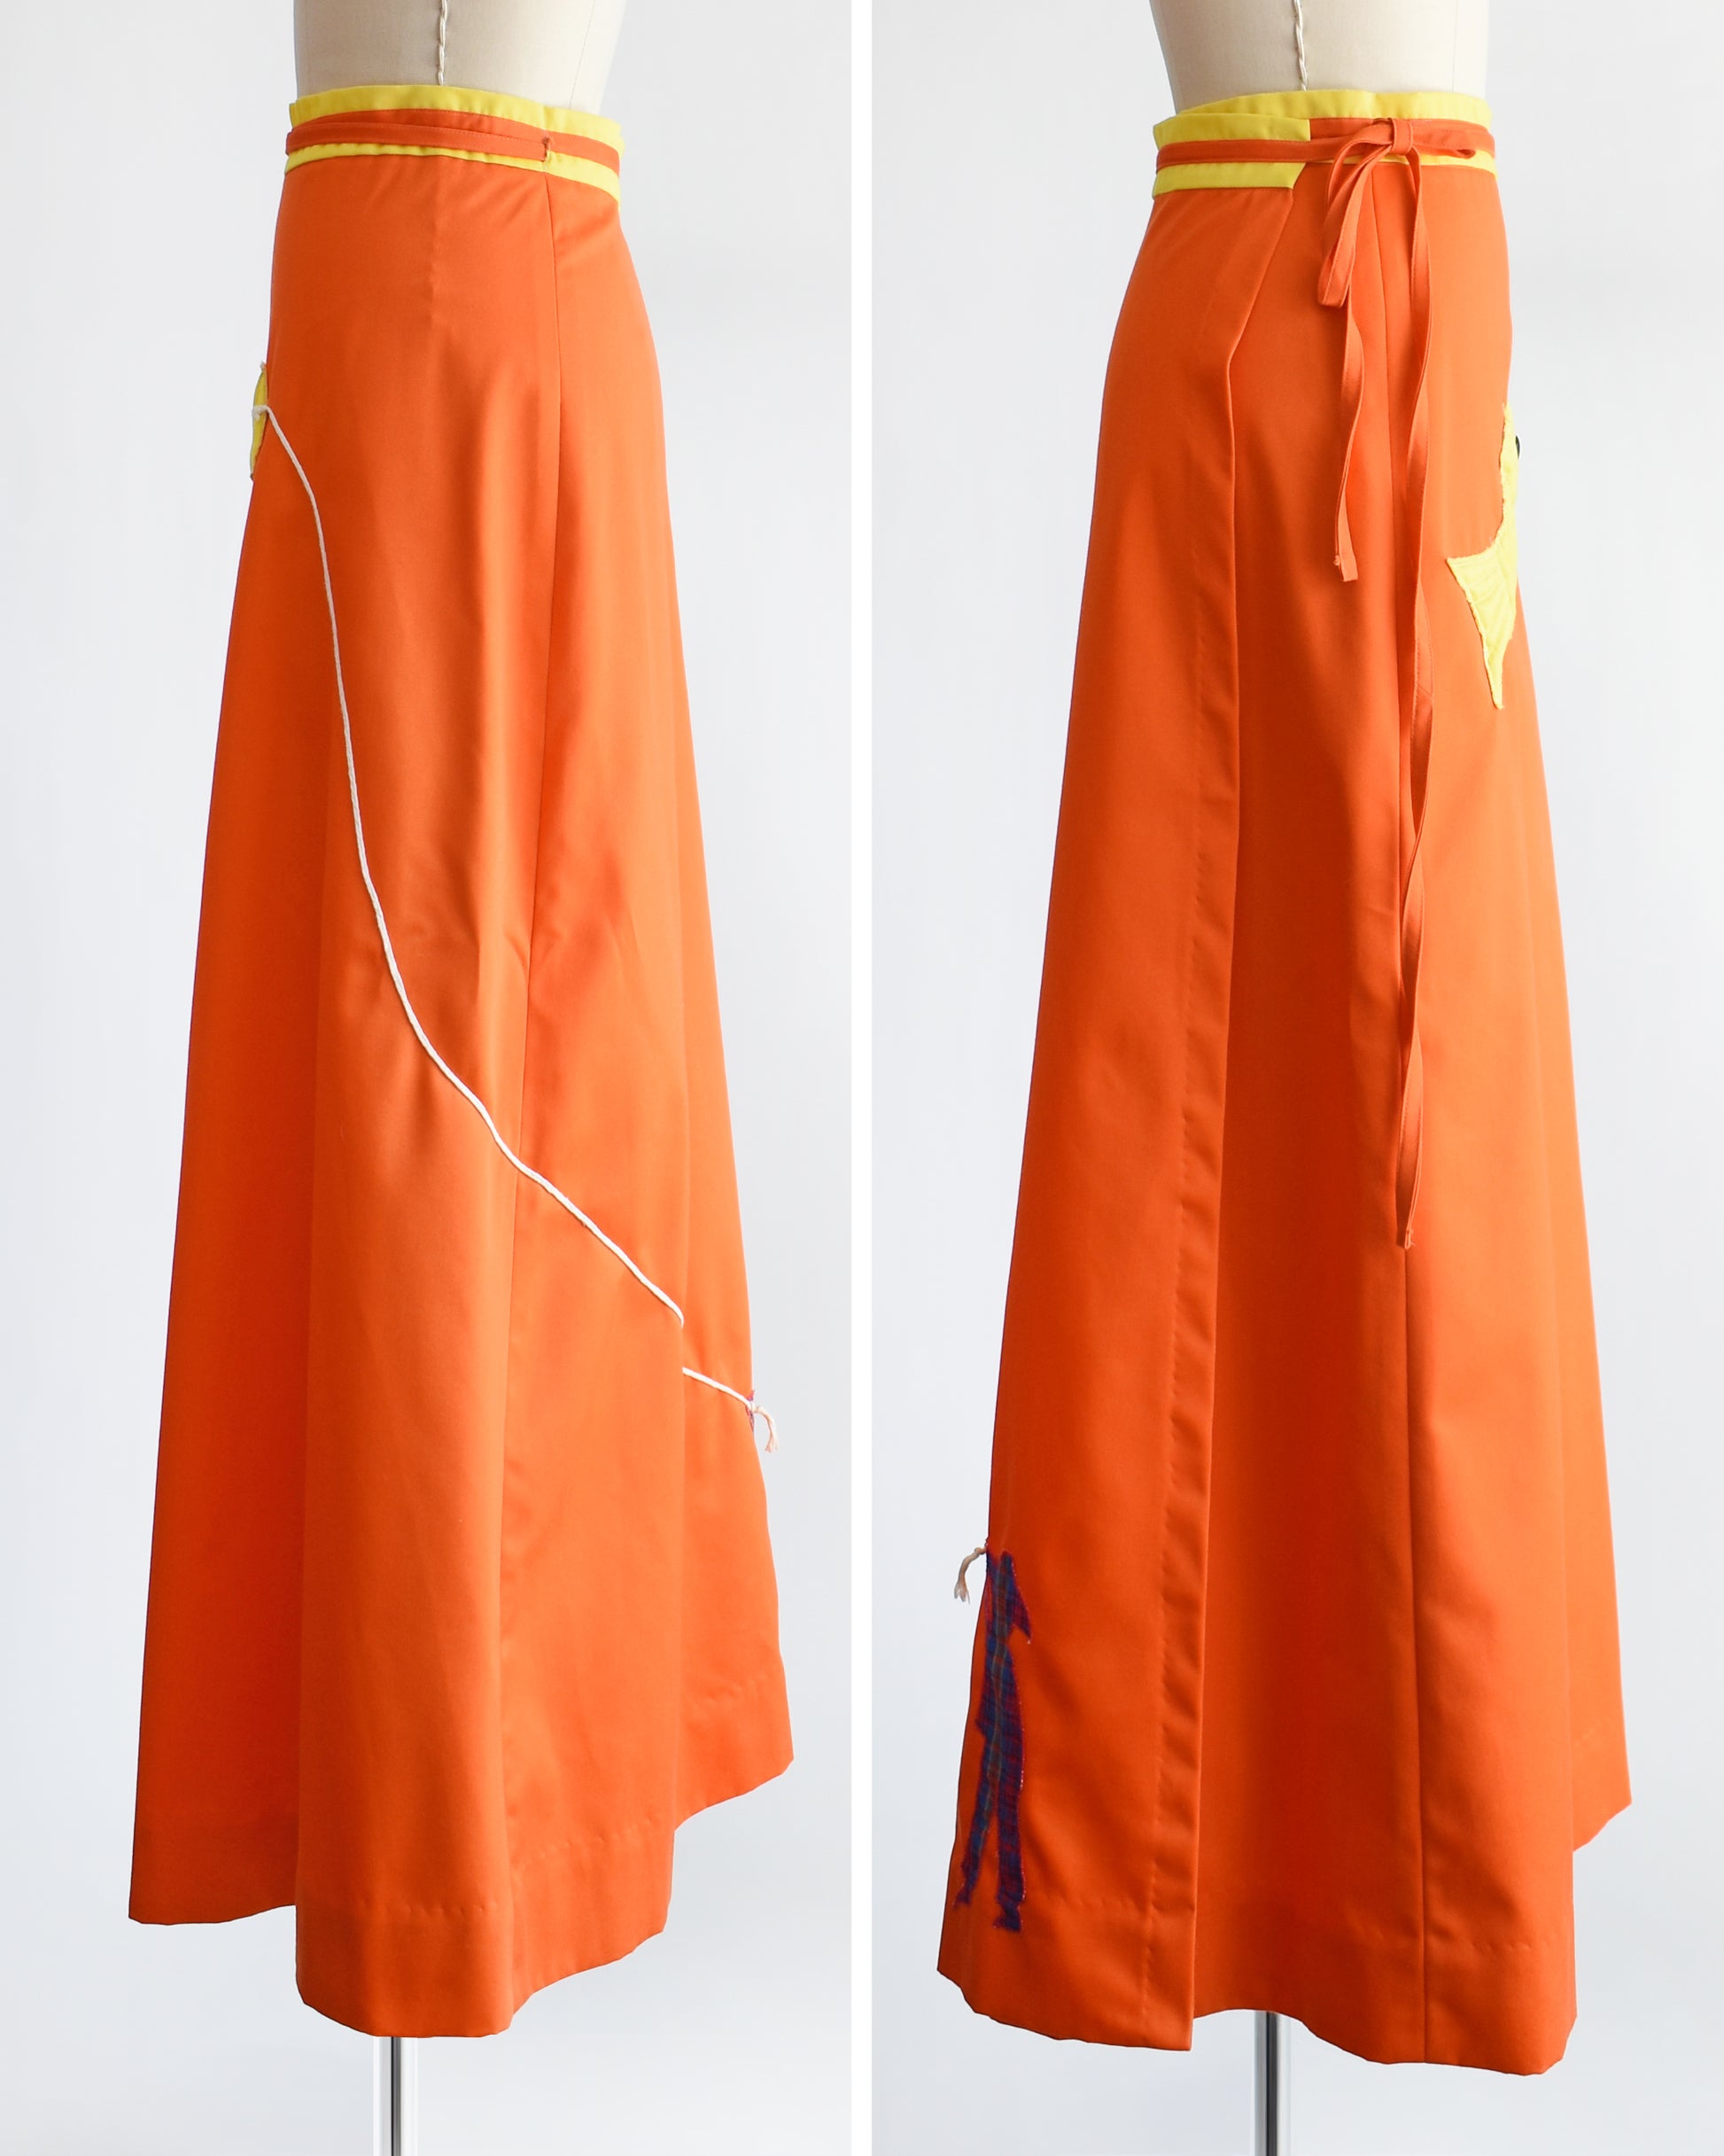 A vintage 1970s fish kite appliqué orange and yellow wrap skirt. The left photo shows the white kite line